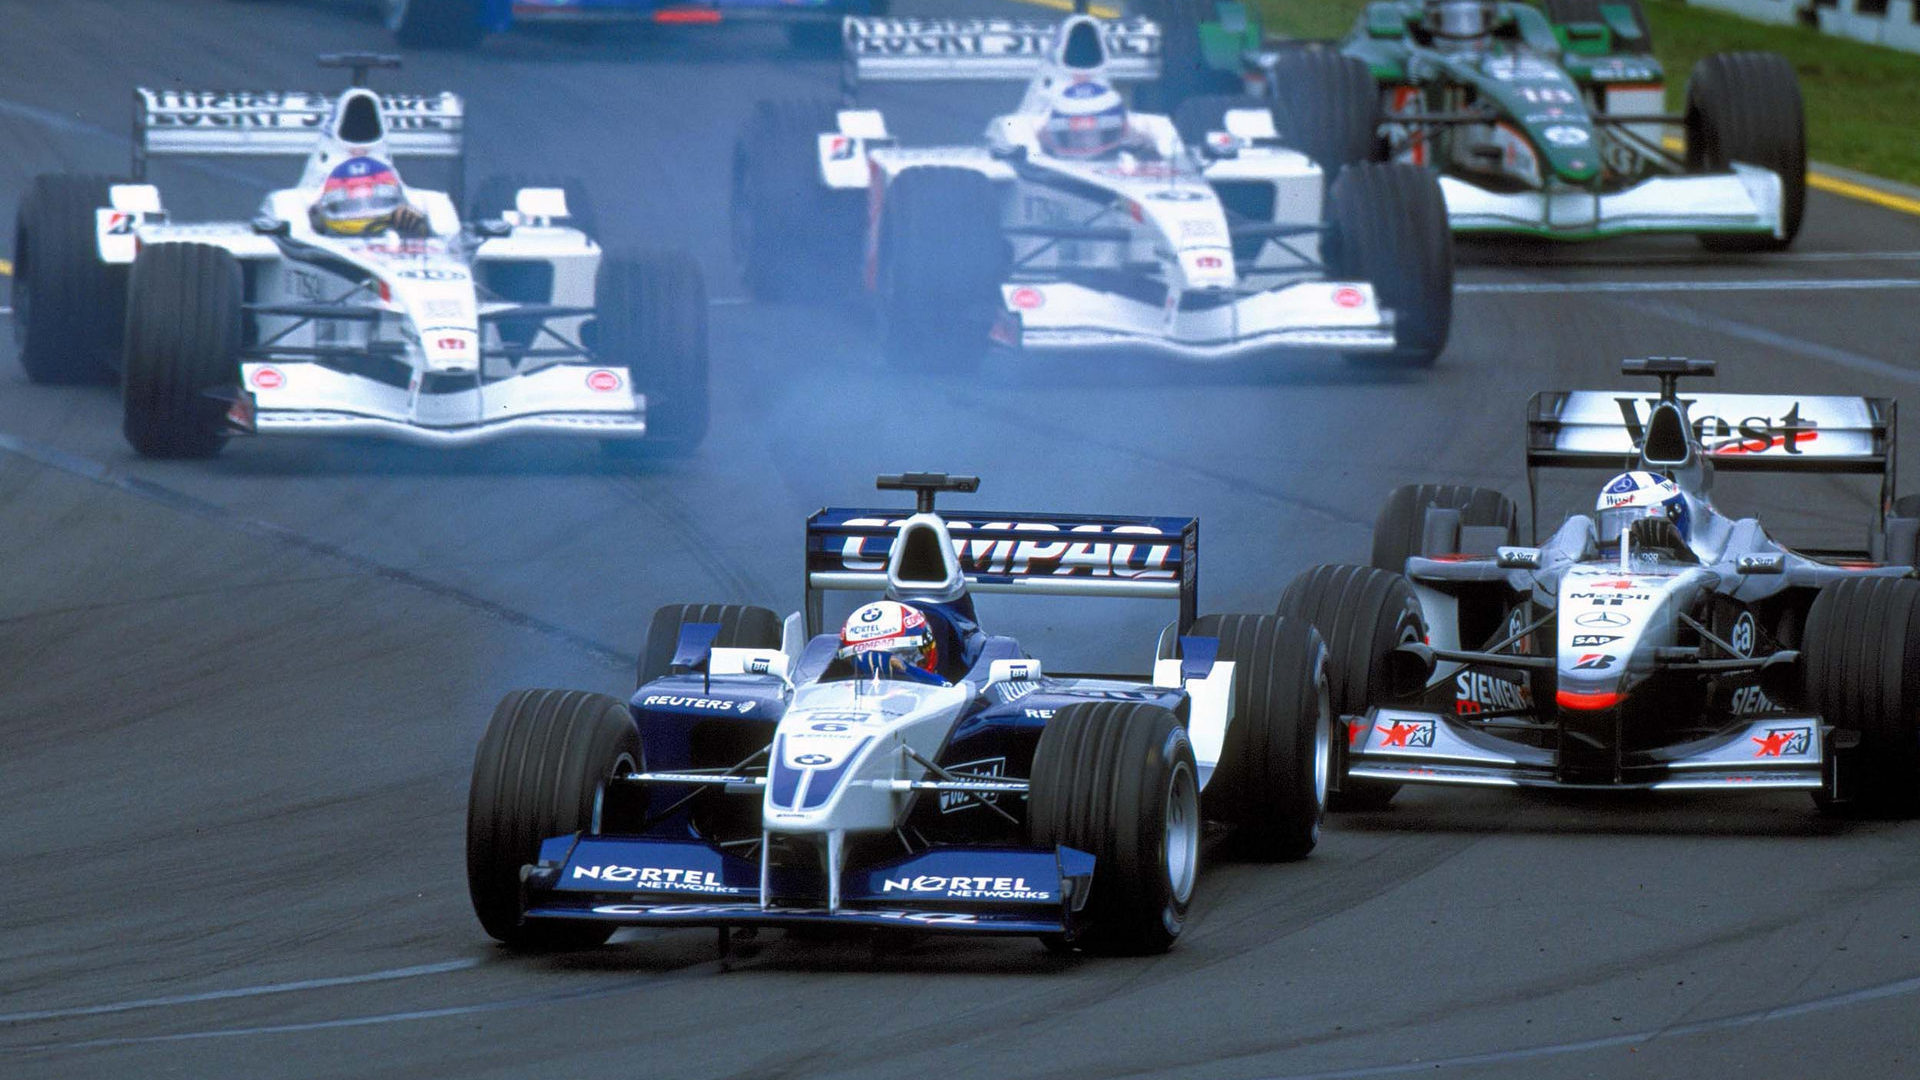 HD Wallpapers 2001 Formula 1 Grand Prix of Australia | F1-